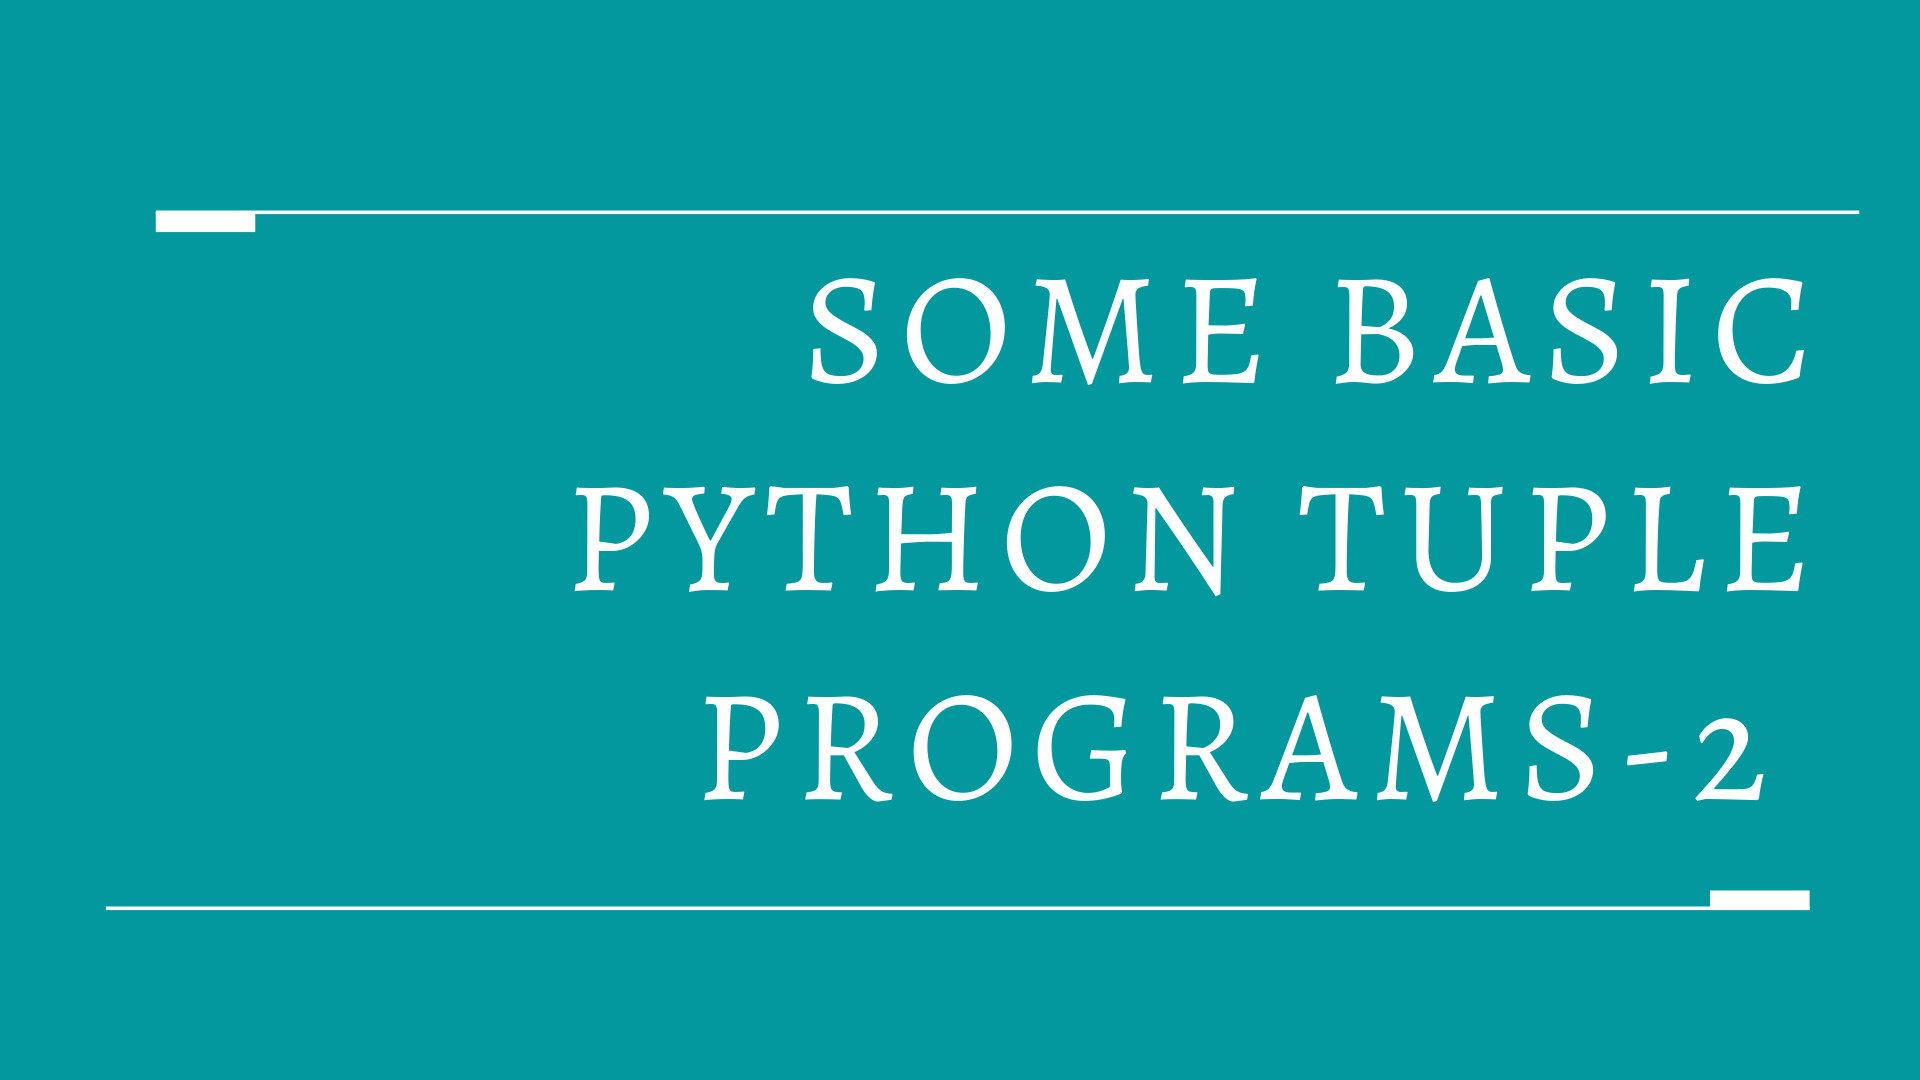 Some Basic Python Tuple Programs-2